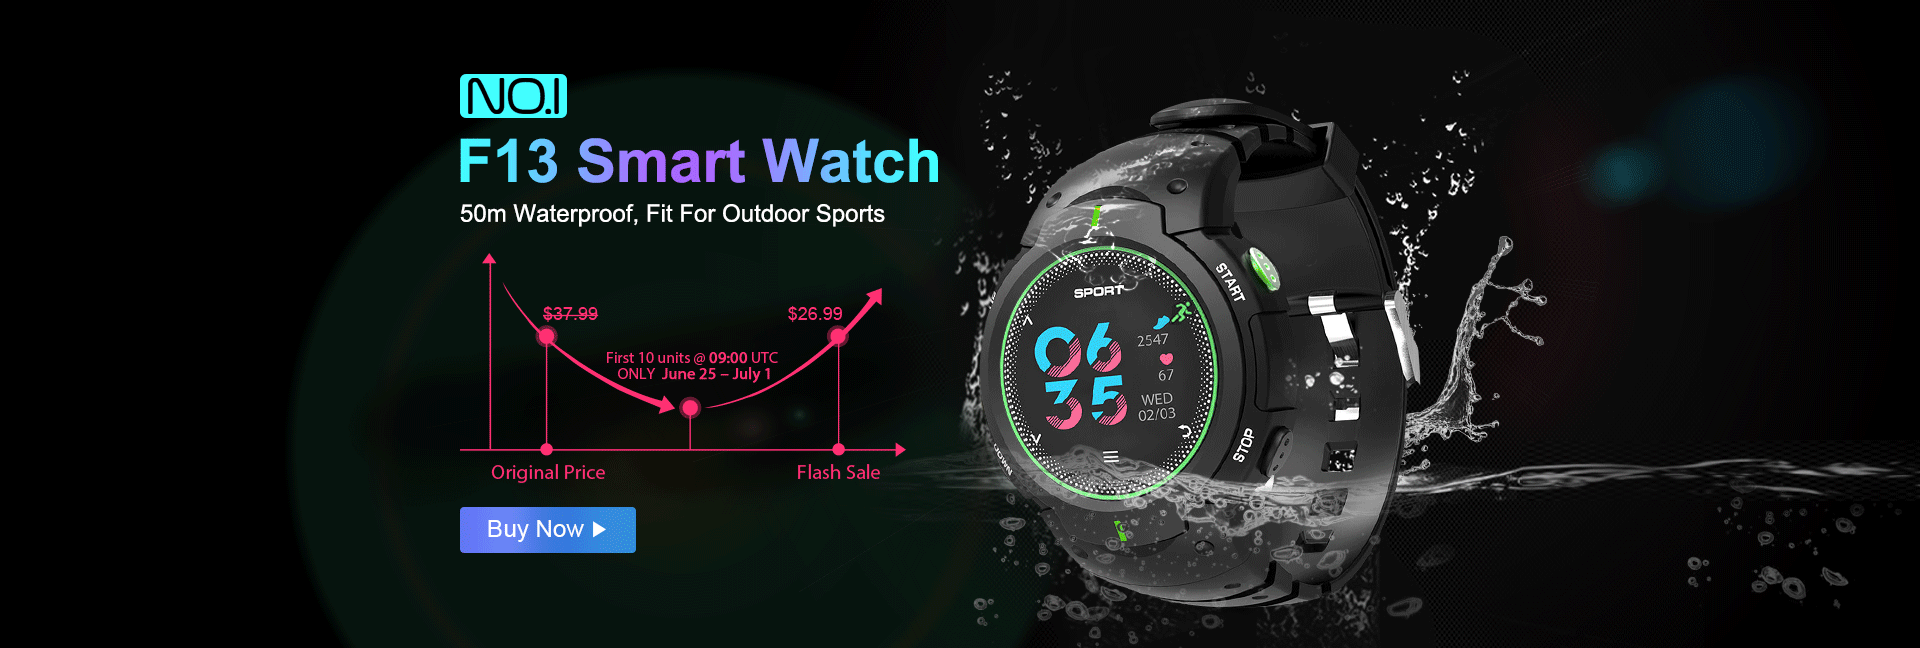 No1 F13 Smartwatch